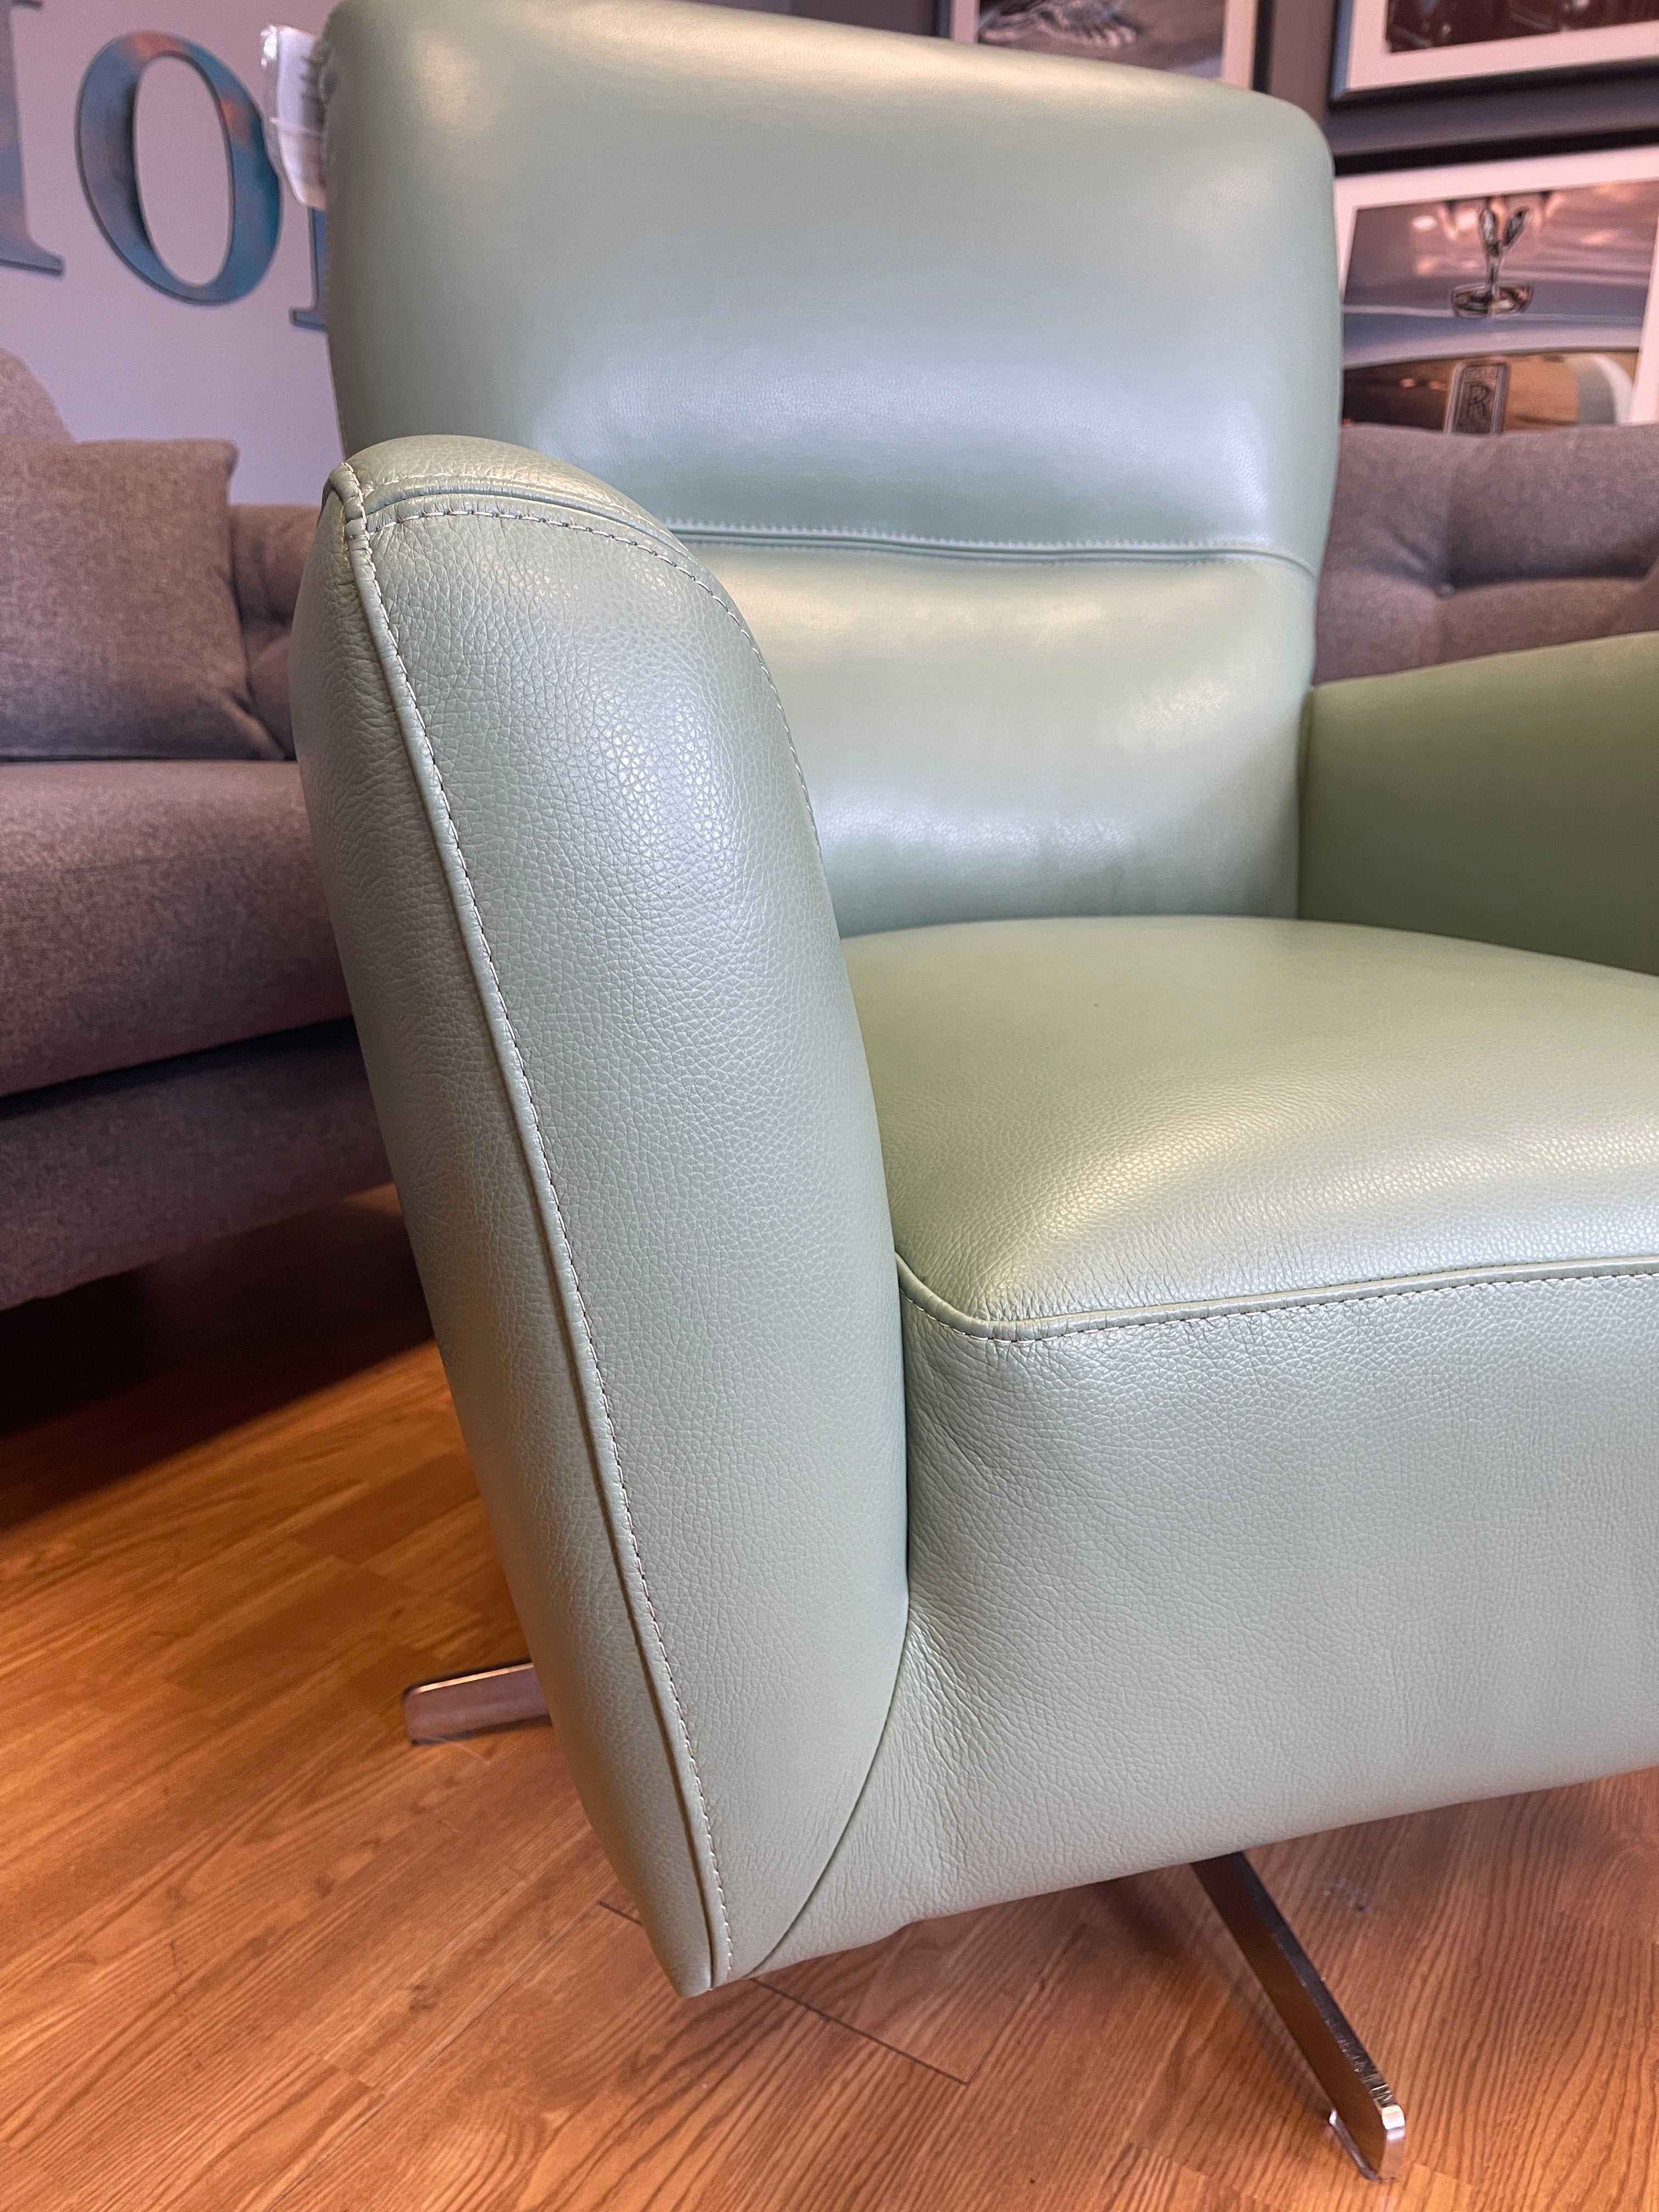 SOFOLOGY ROWAN accent armchair swivel chair in soft mint green soft leather chrome base